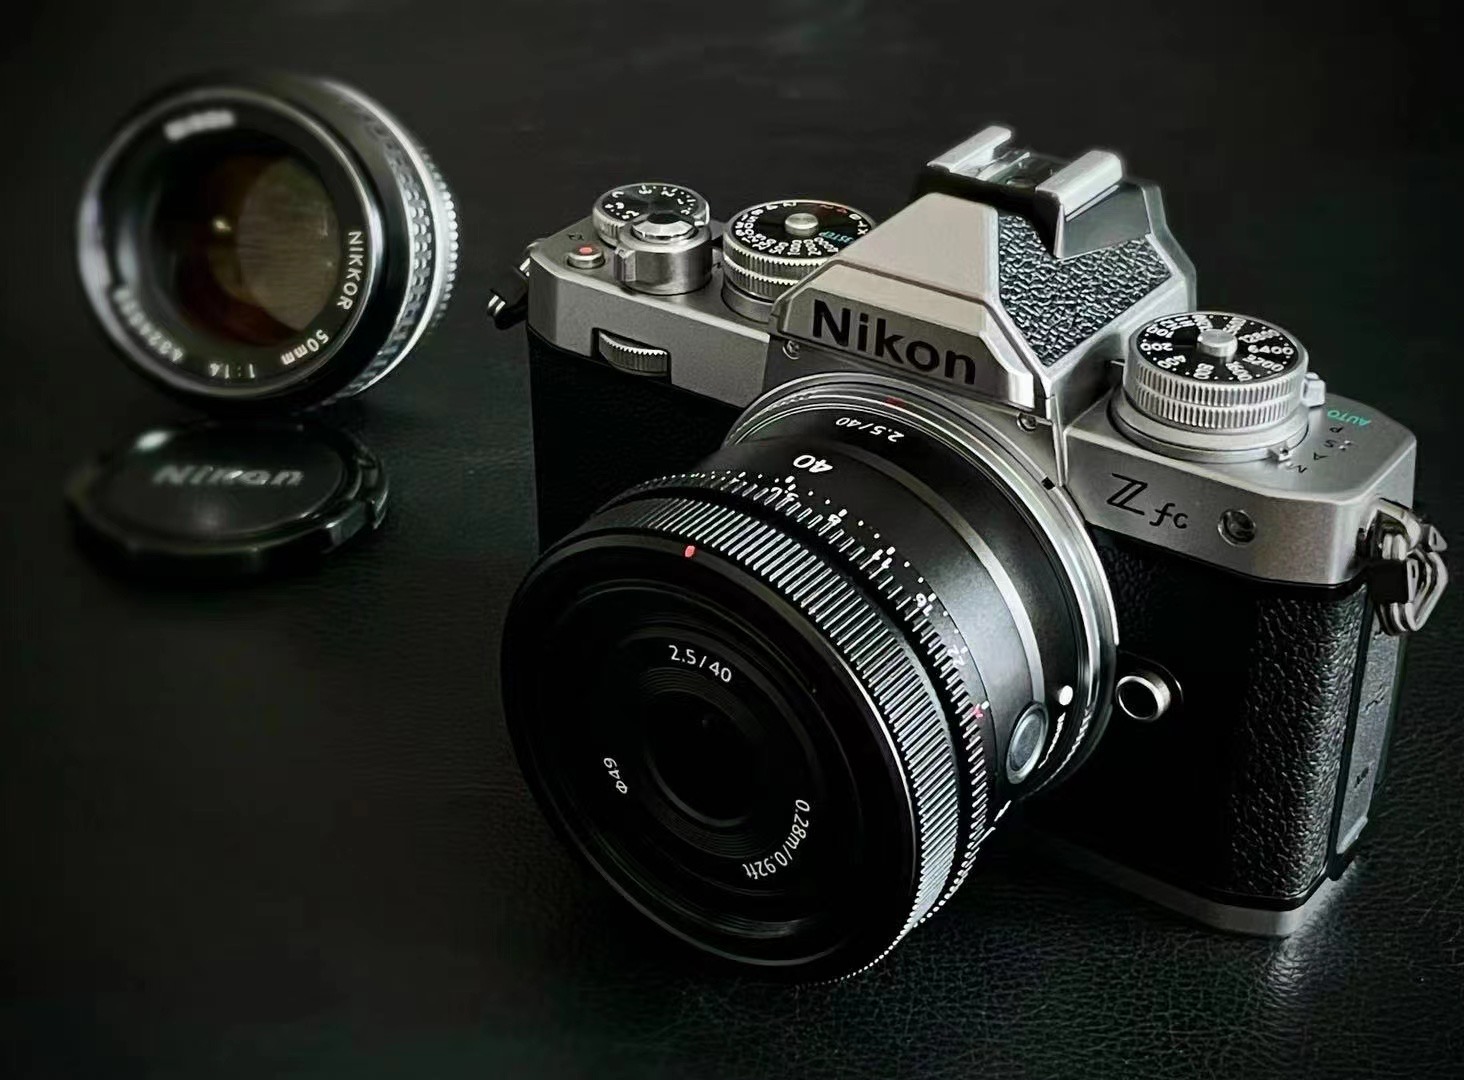 Today's Deals: Tamron 35mm USD Lens for Nikon F, Sachtler aktiv12T